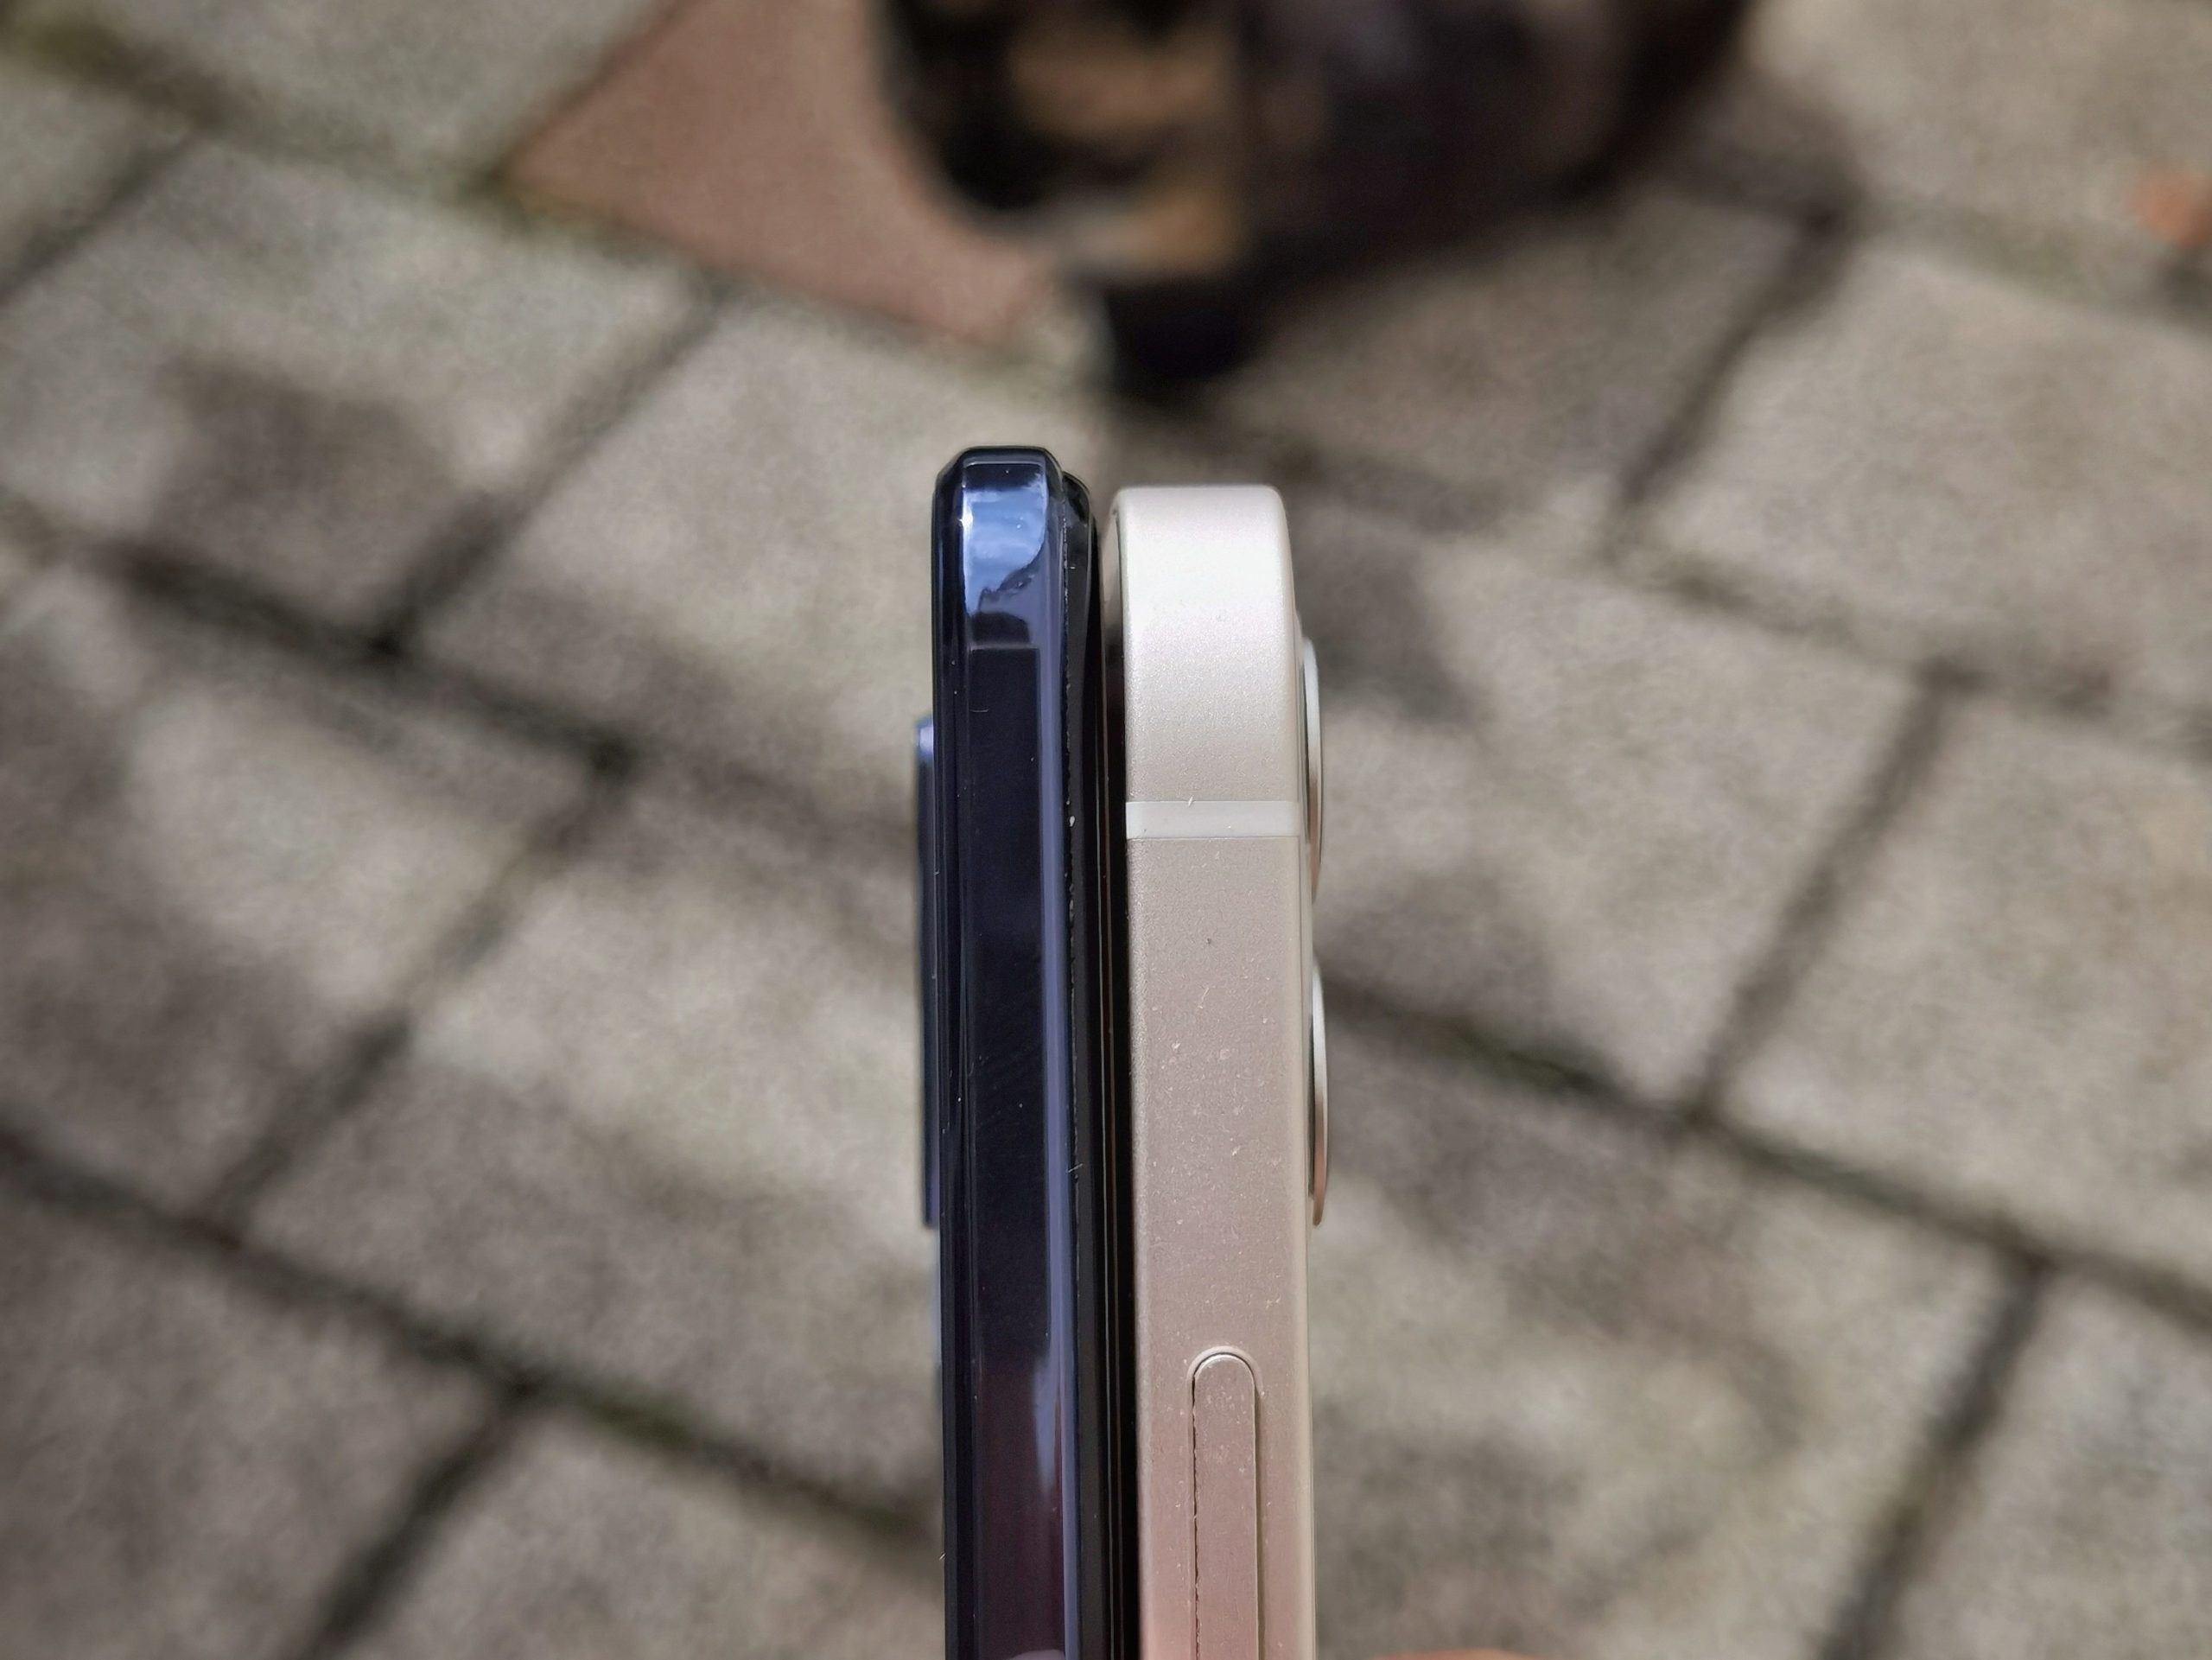 Vivo V21 5G Review: The Selfie Phone - Tech Advisor